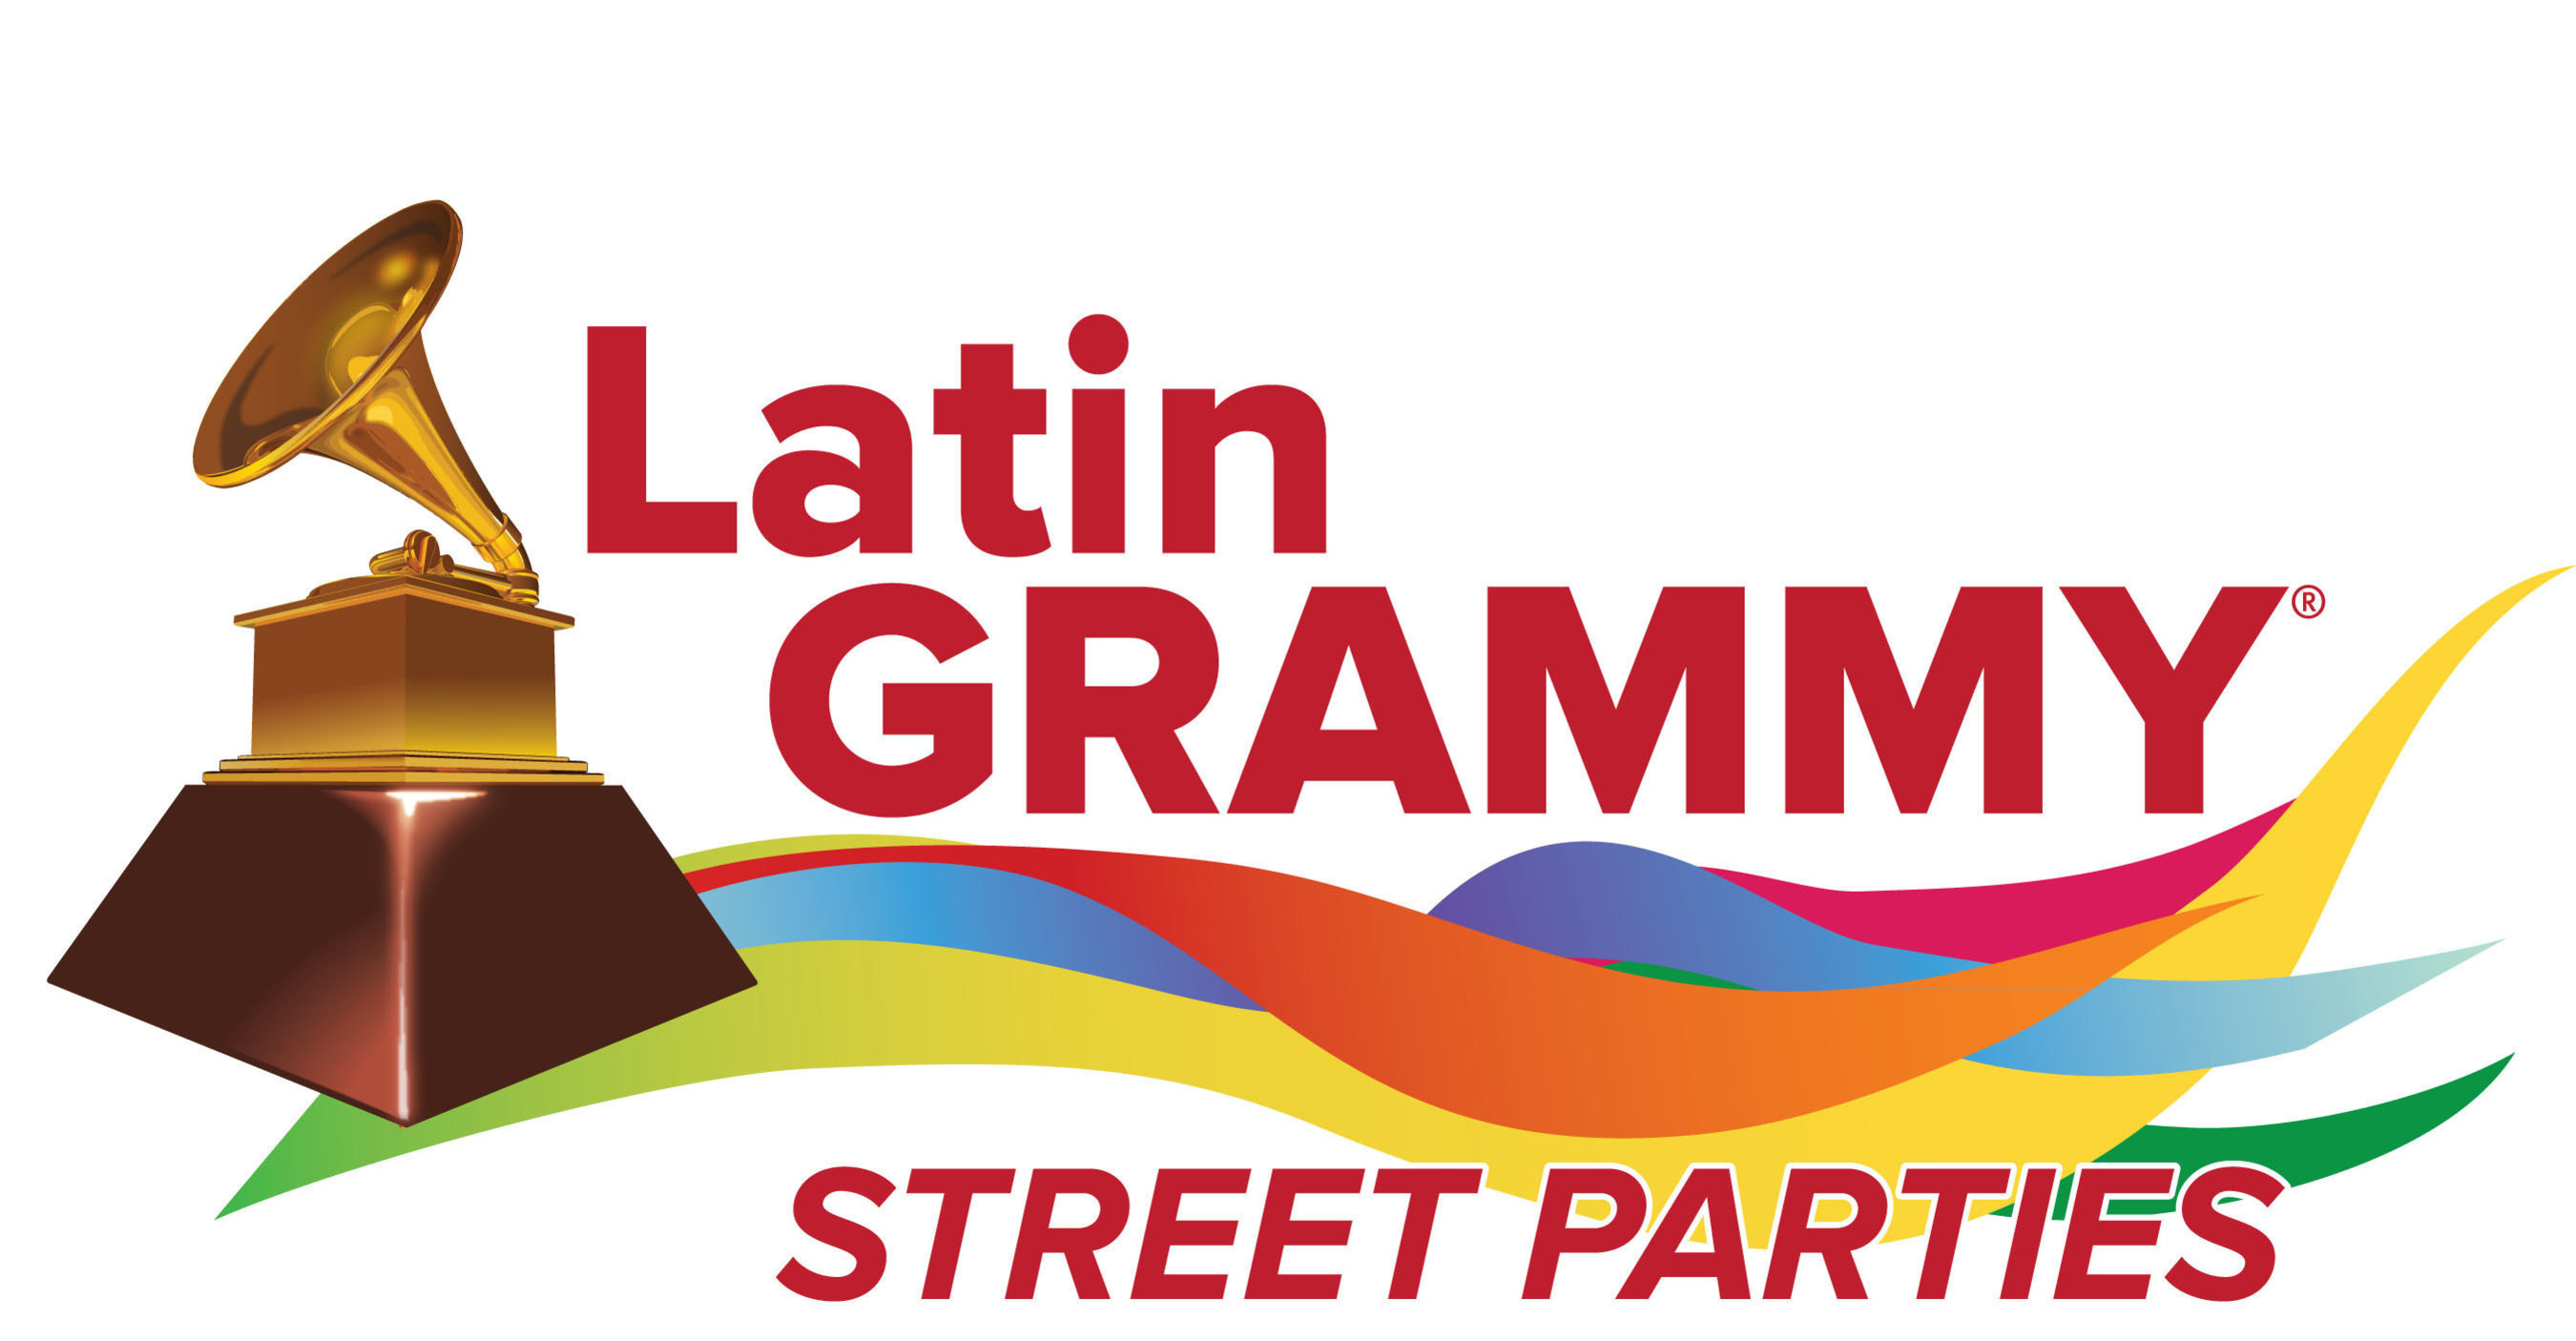 Latin GRAMMY Street Parties Logo